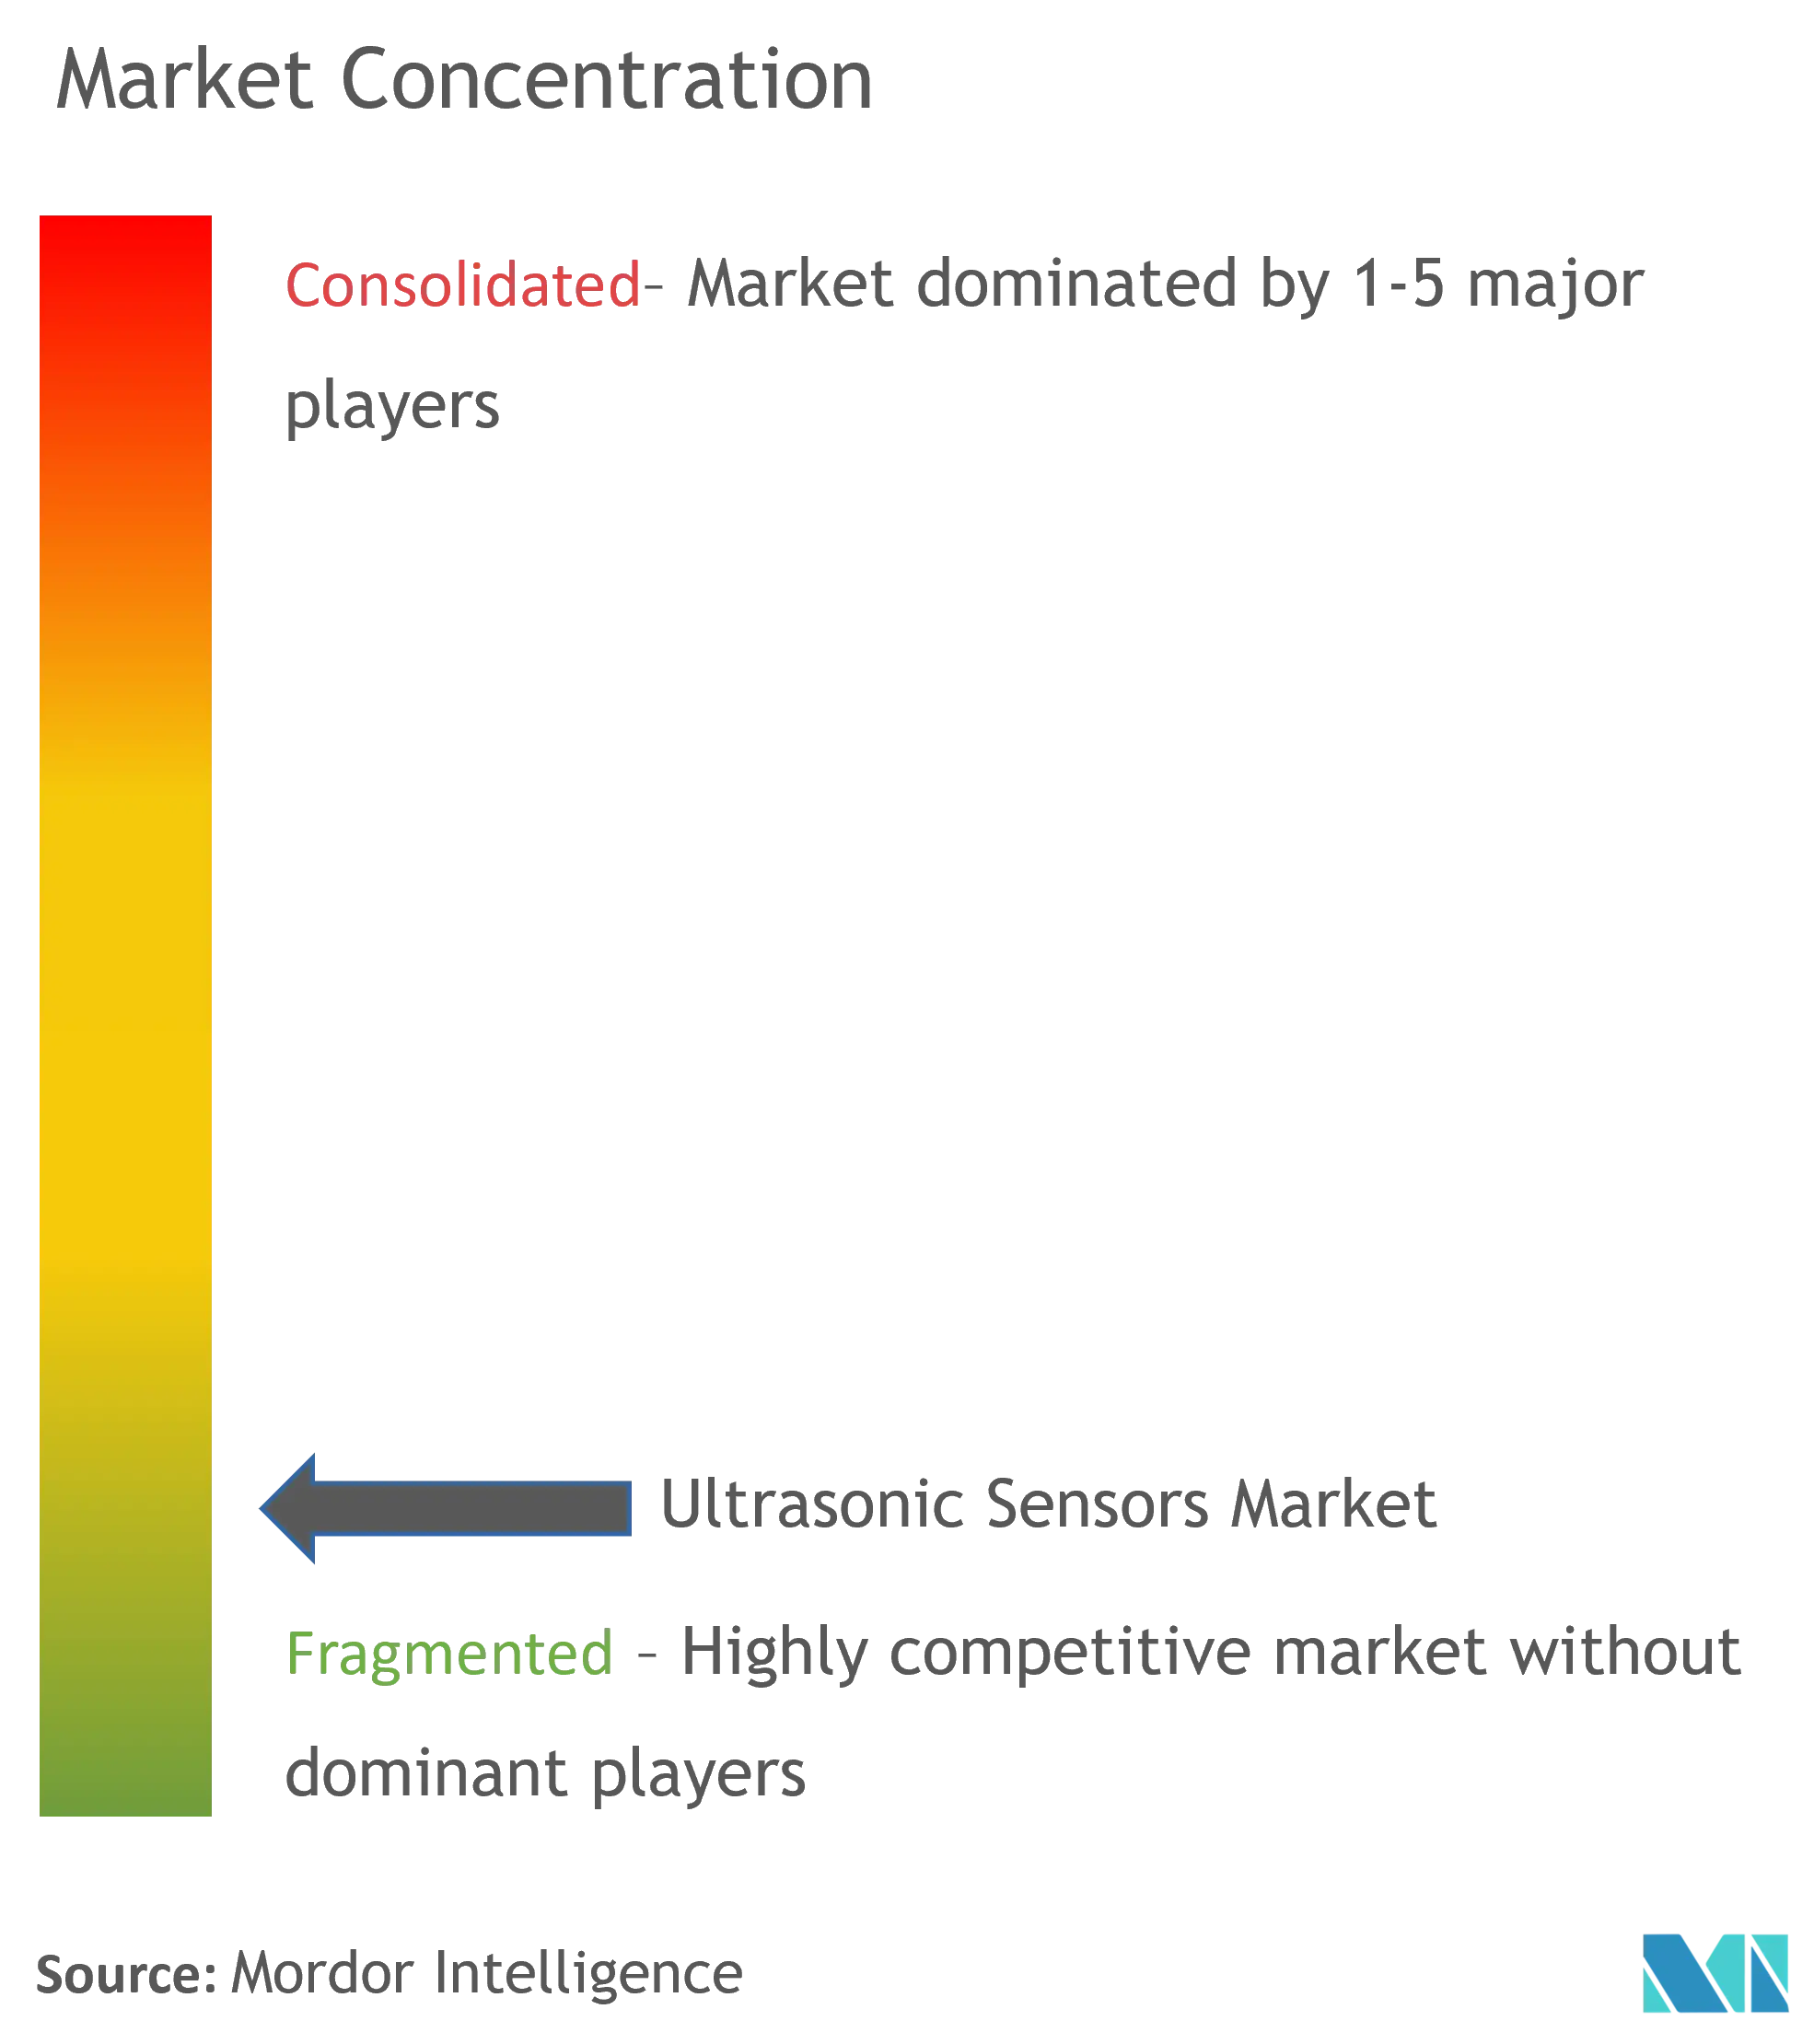 Ultrasonic Sensors Market Concentration